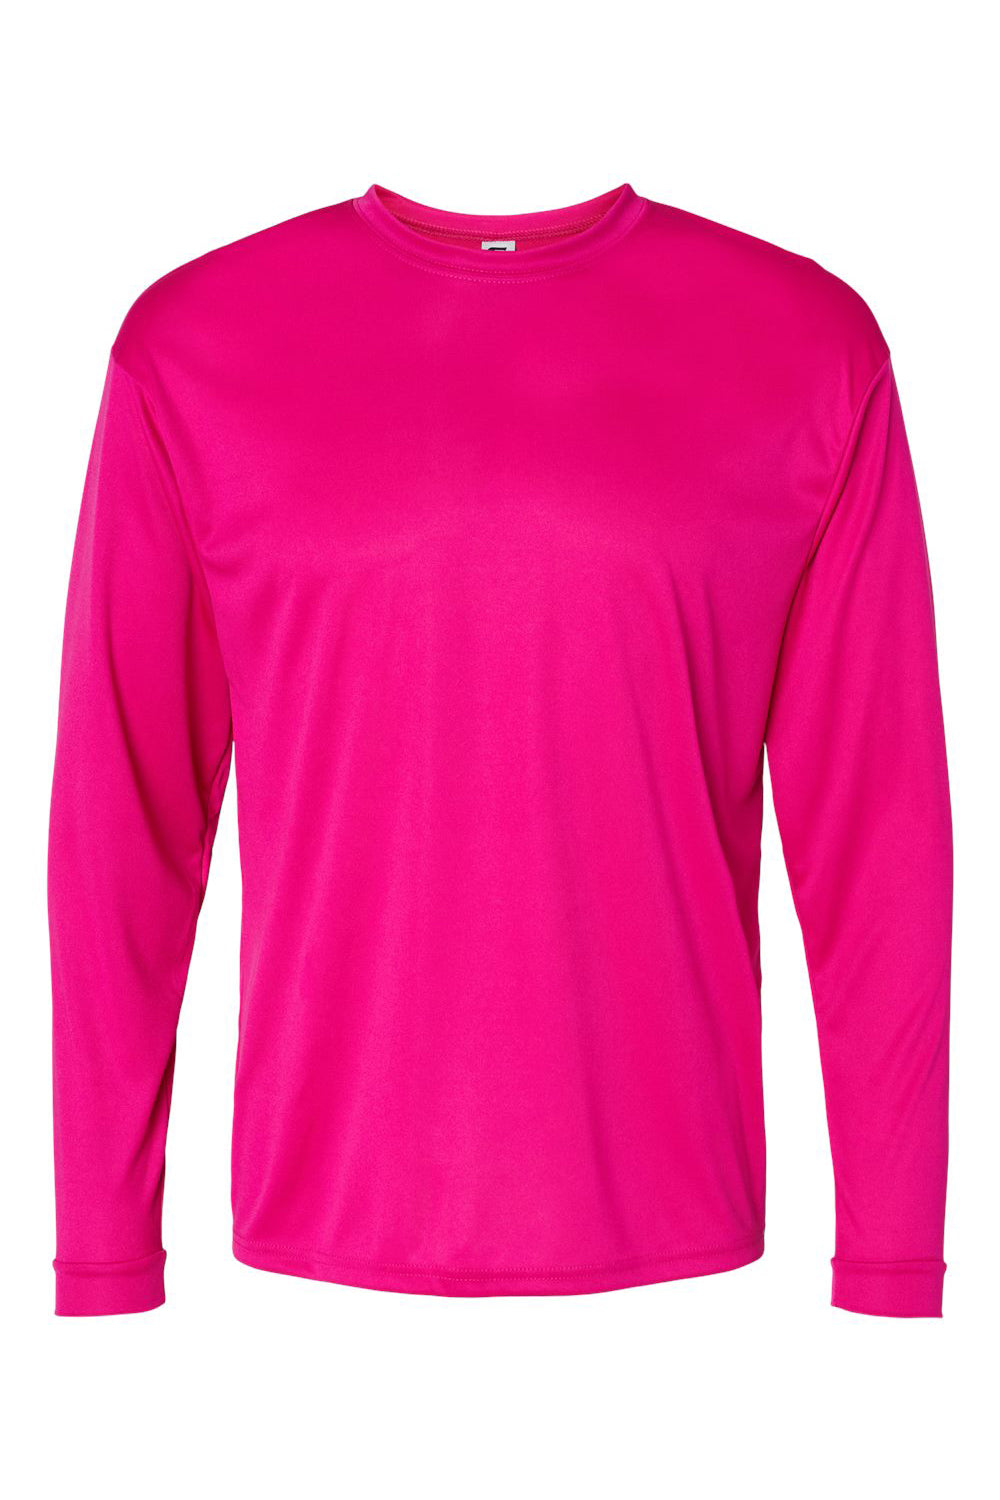 C2 Sport 5104 Mens Performance Moisture Wicking Long Sleeve Crewneck T-Shirt Hot Pink Flat Front